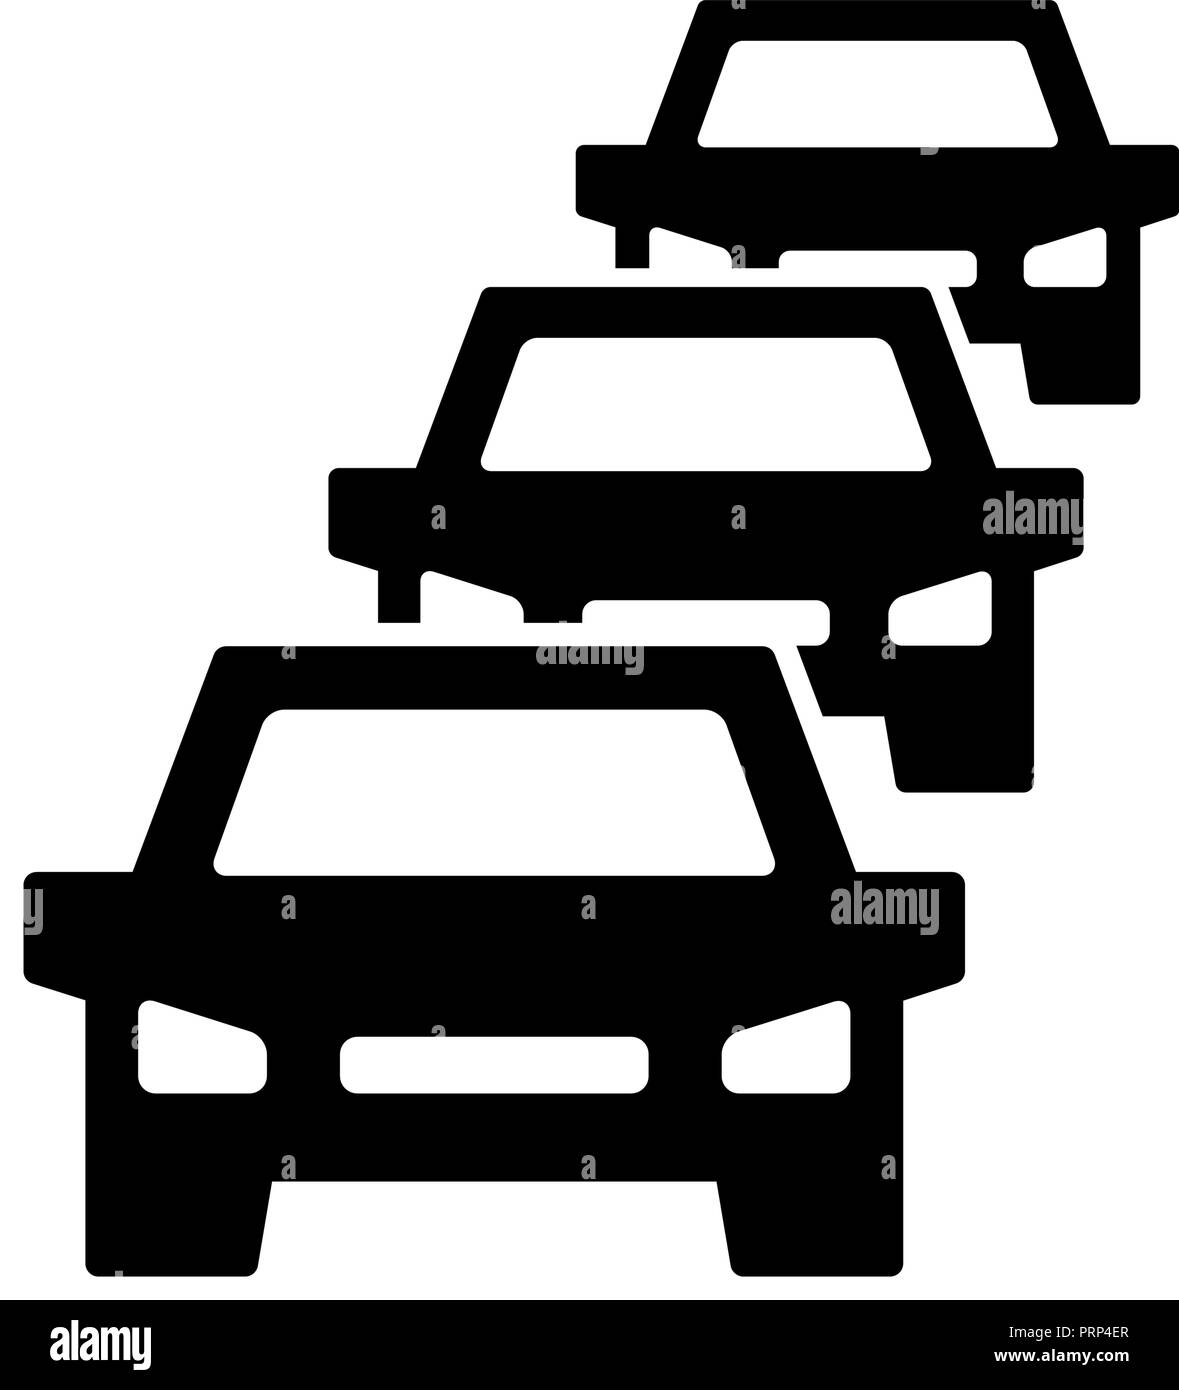 Car traffic jam symbol and sign illustration on white background. Stock Vector